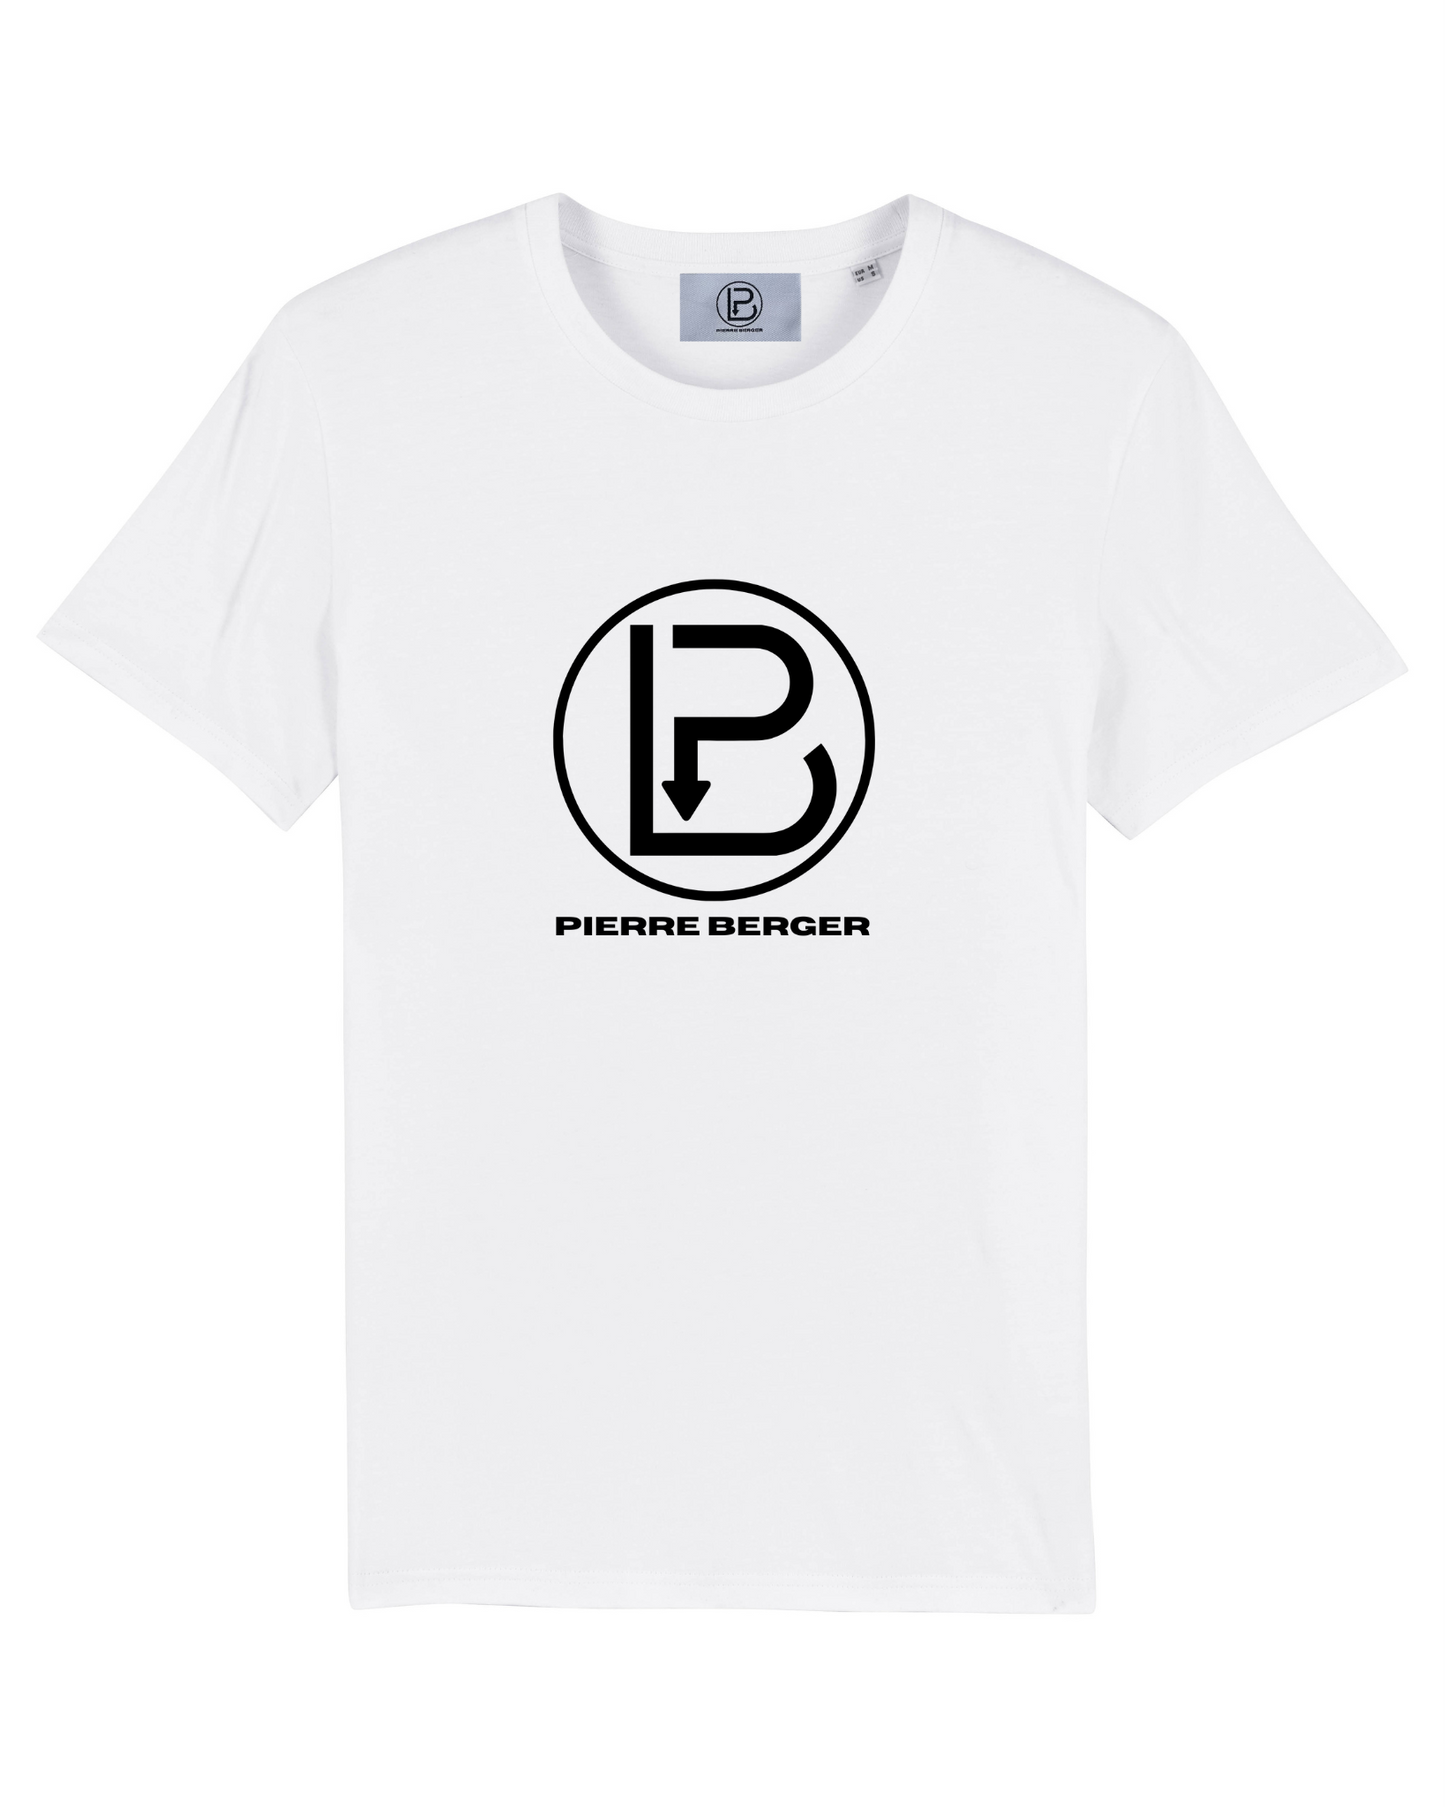 PIERRE BERGER- 100% Organic Cotton Unisex T-Shirt